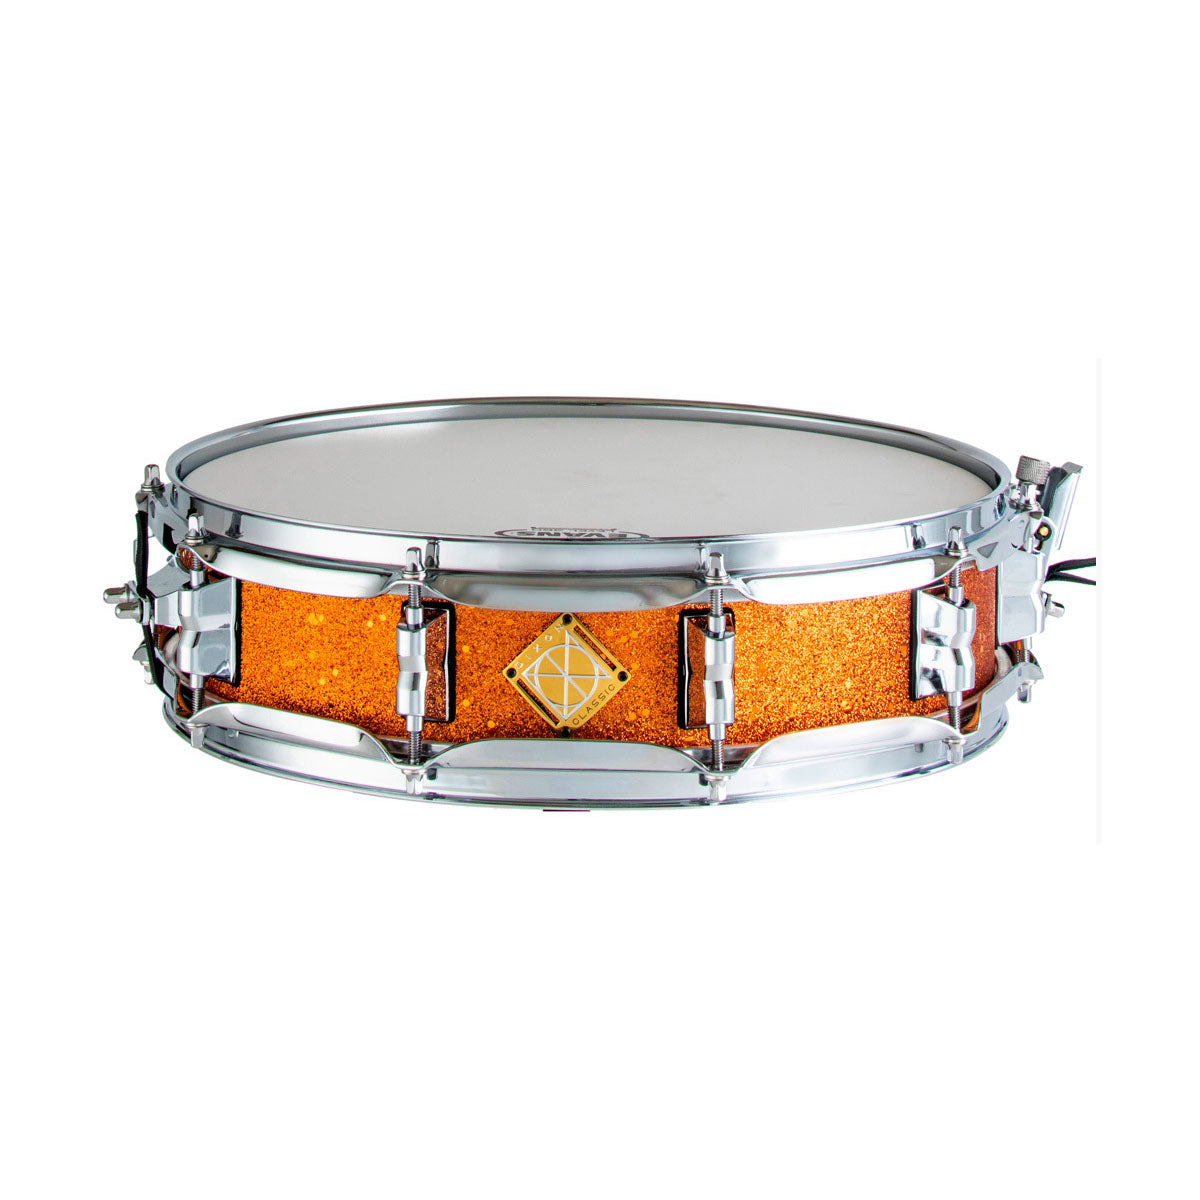 Dixon Classic Series Snare Drum Orange Sparkle - 14x3.5inch - PDSCL354OS